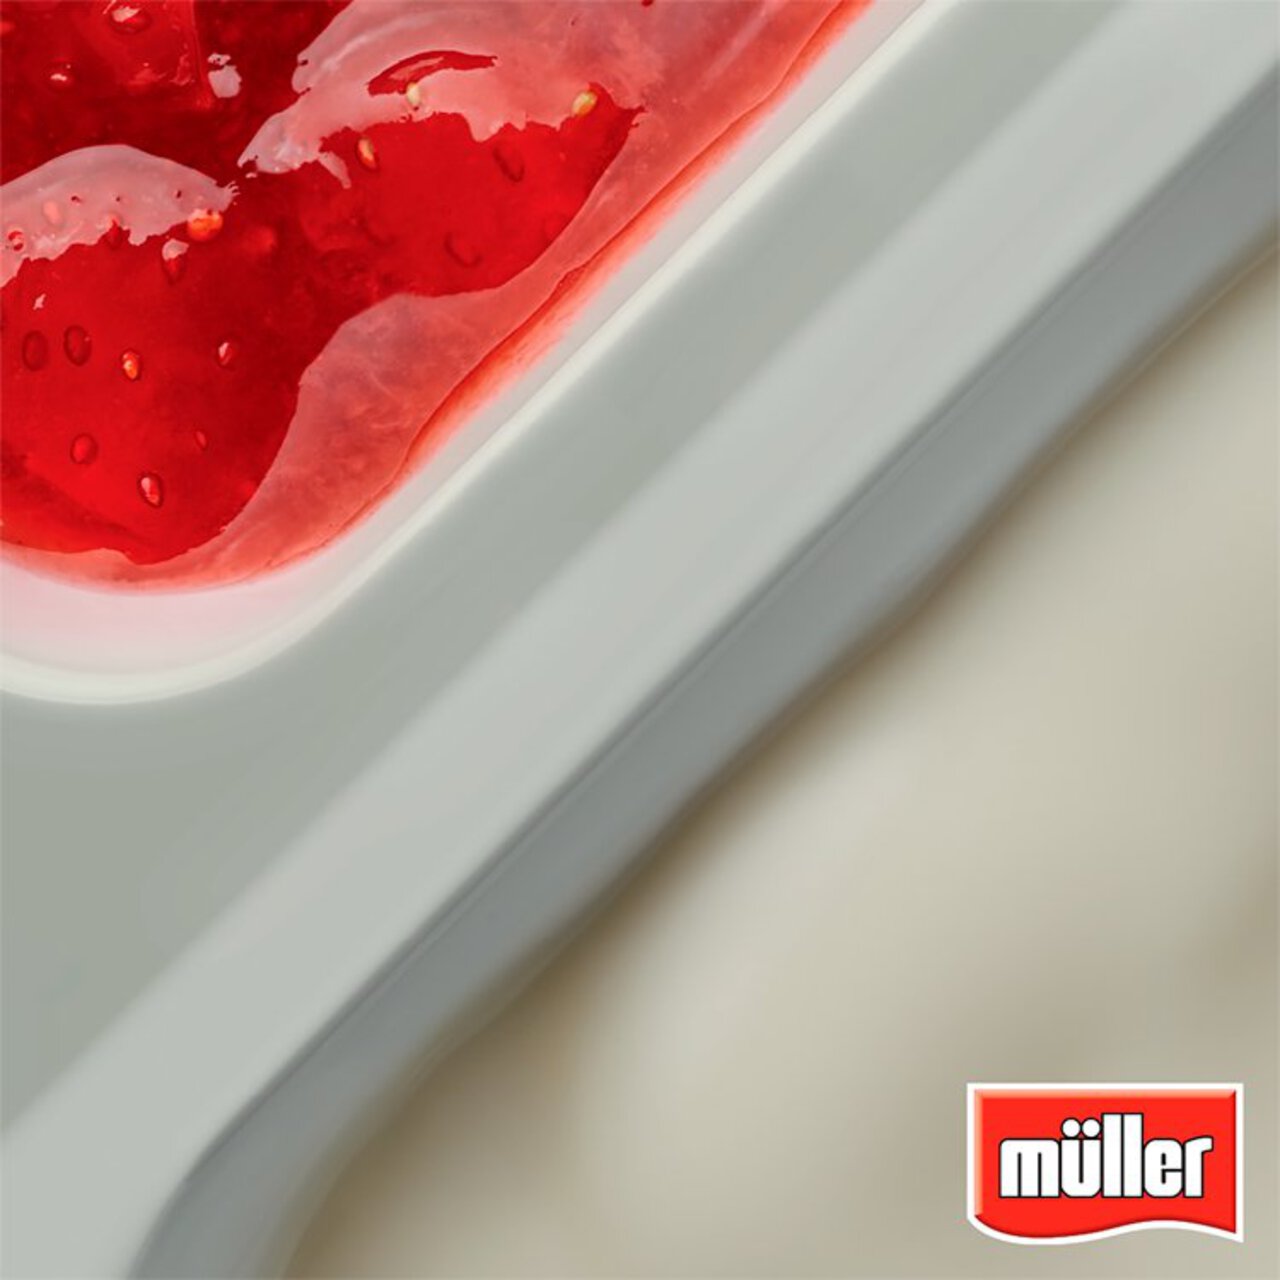 Muller Corner Strawberry and Peach & Apricot Yogurts 6 x 136g